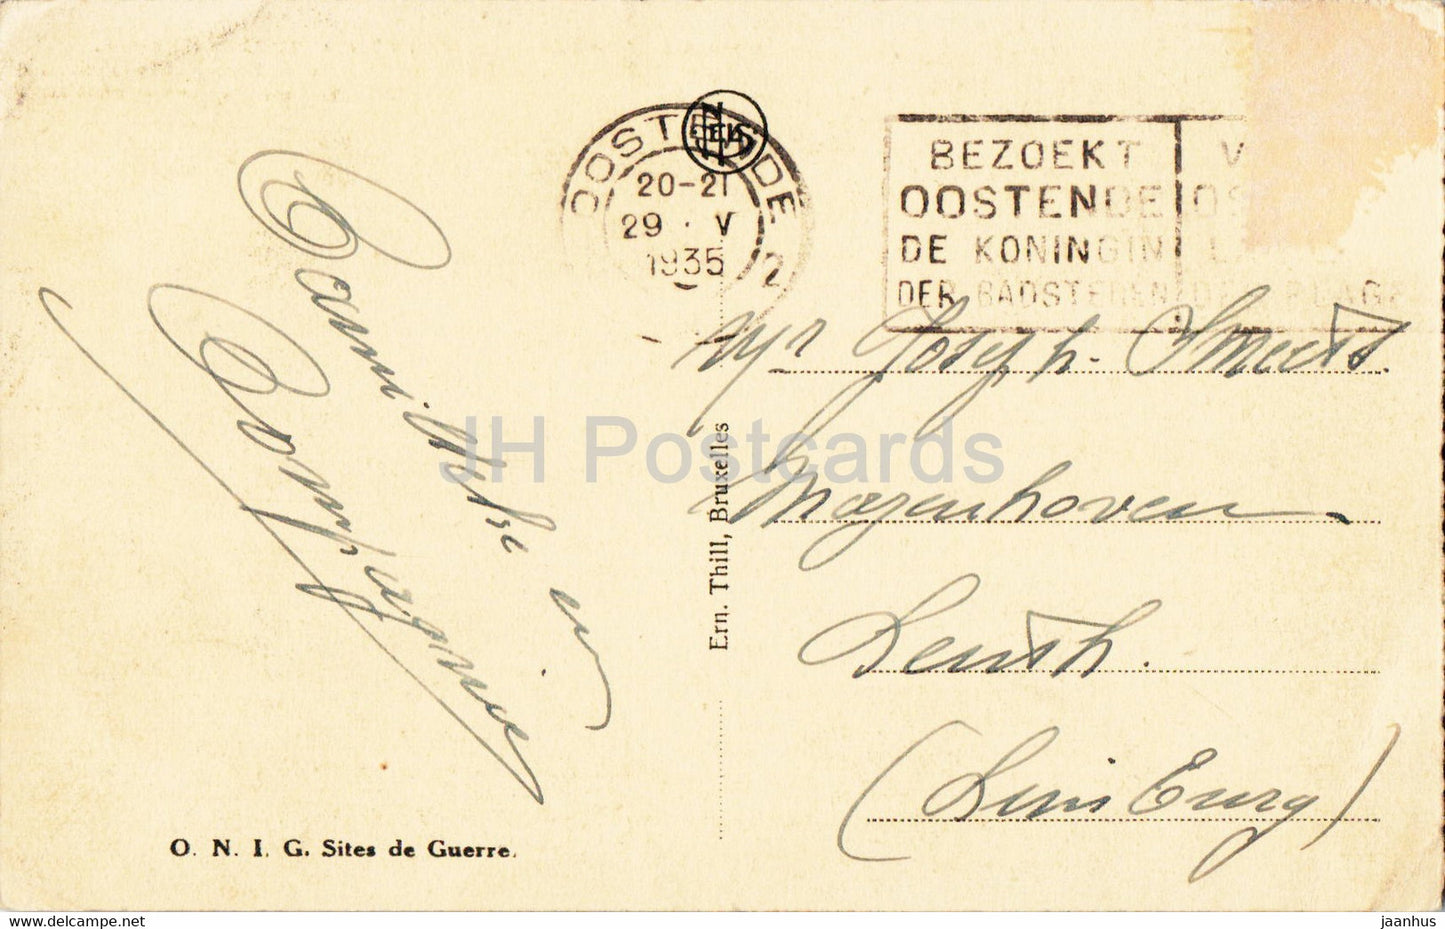 Diksmuide - Boyau de la mort a Dixmude - A Droite - military - old postcard - 1935 - Belgium - used